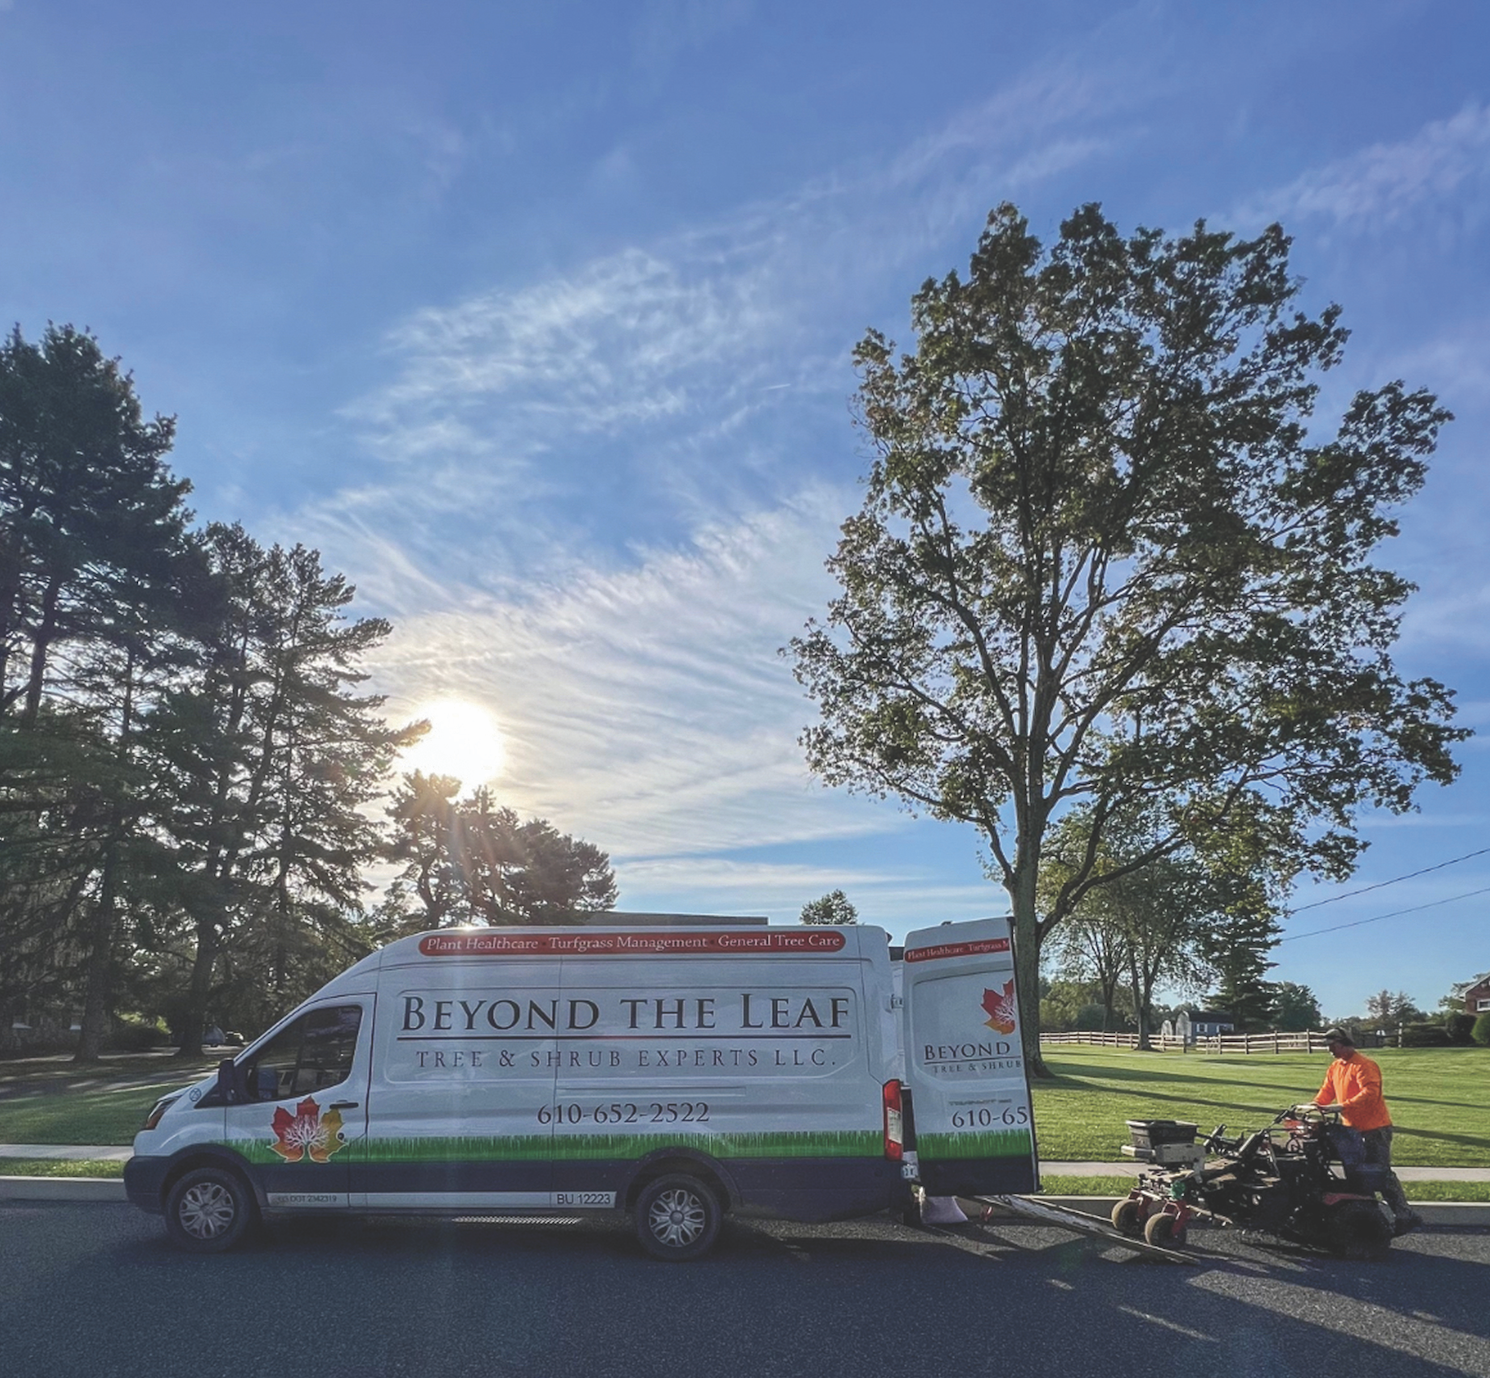 Beyond the Lead Tree & Shrub Experts LLCs Van